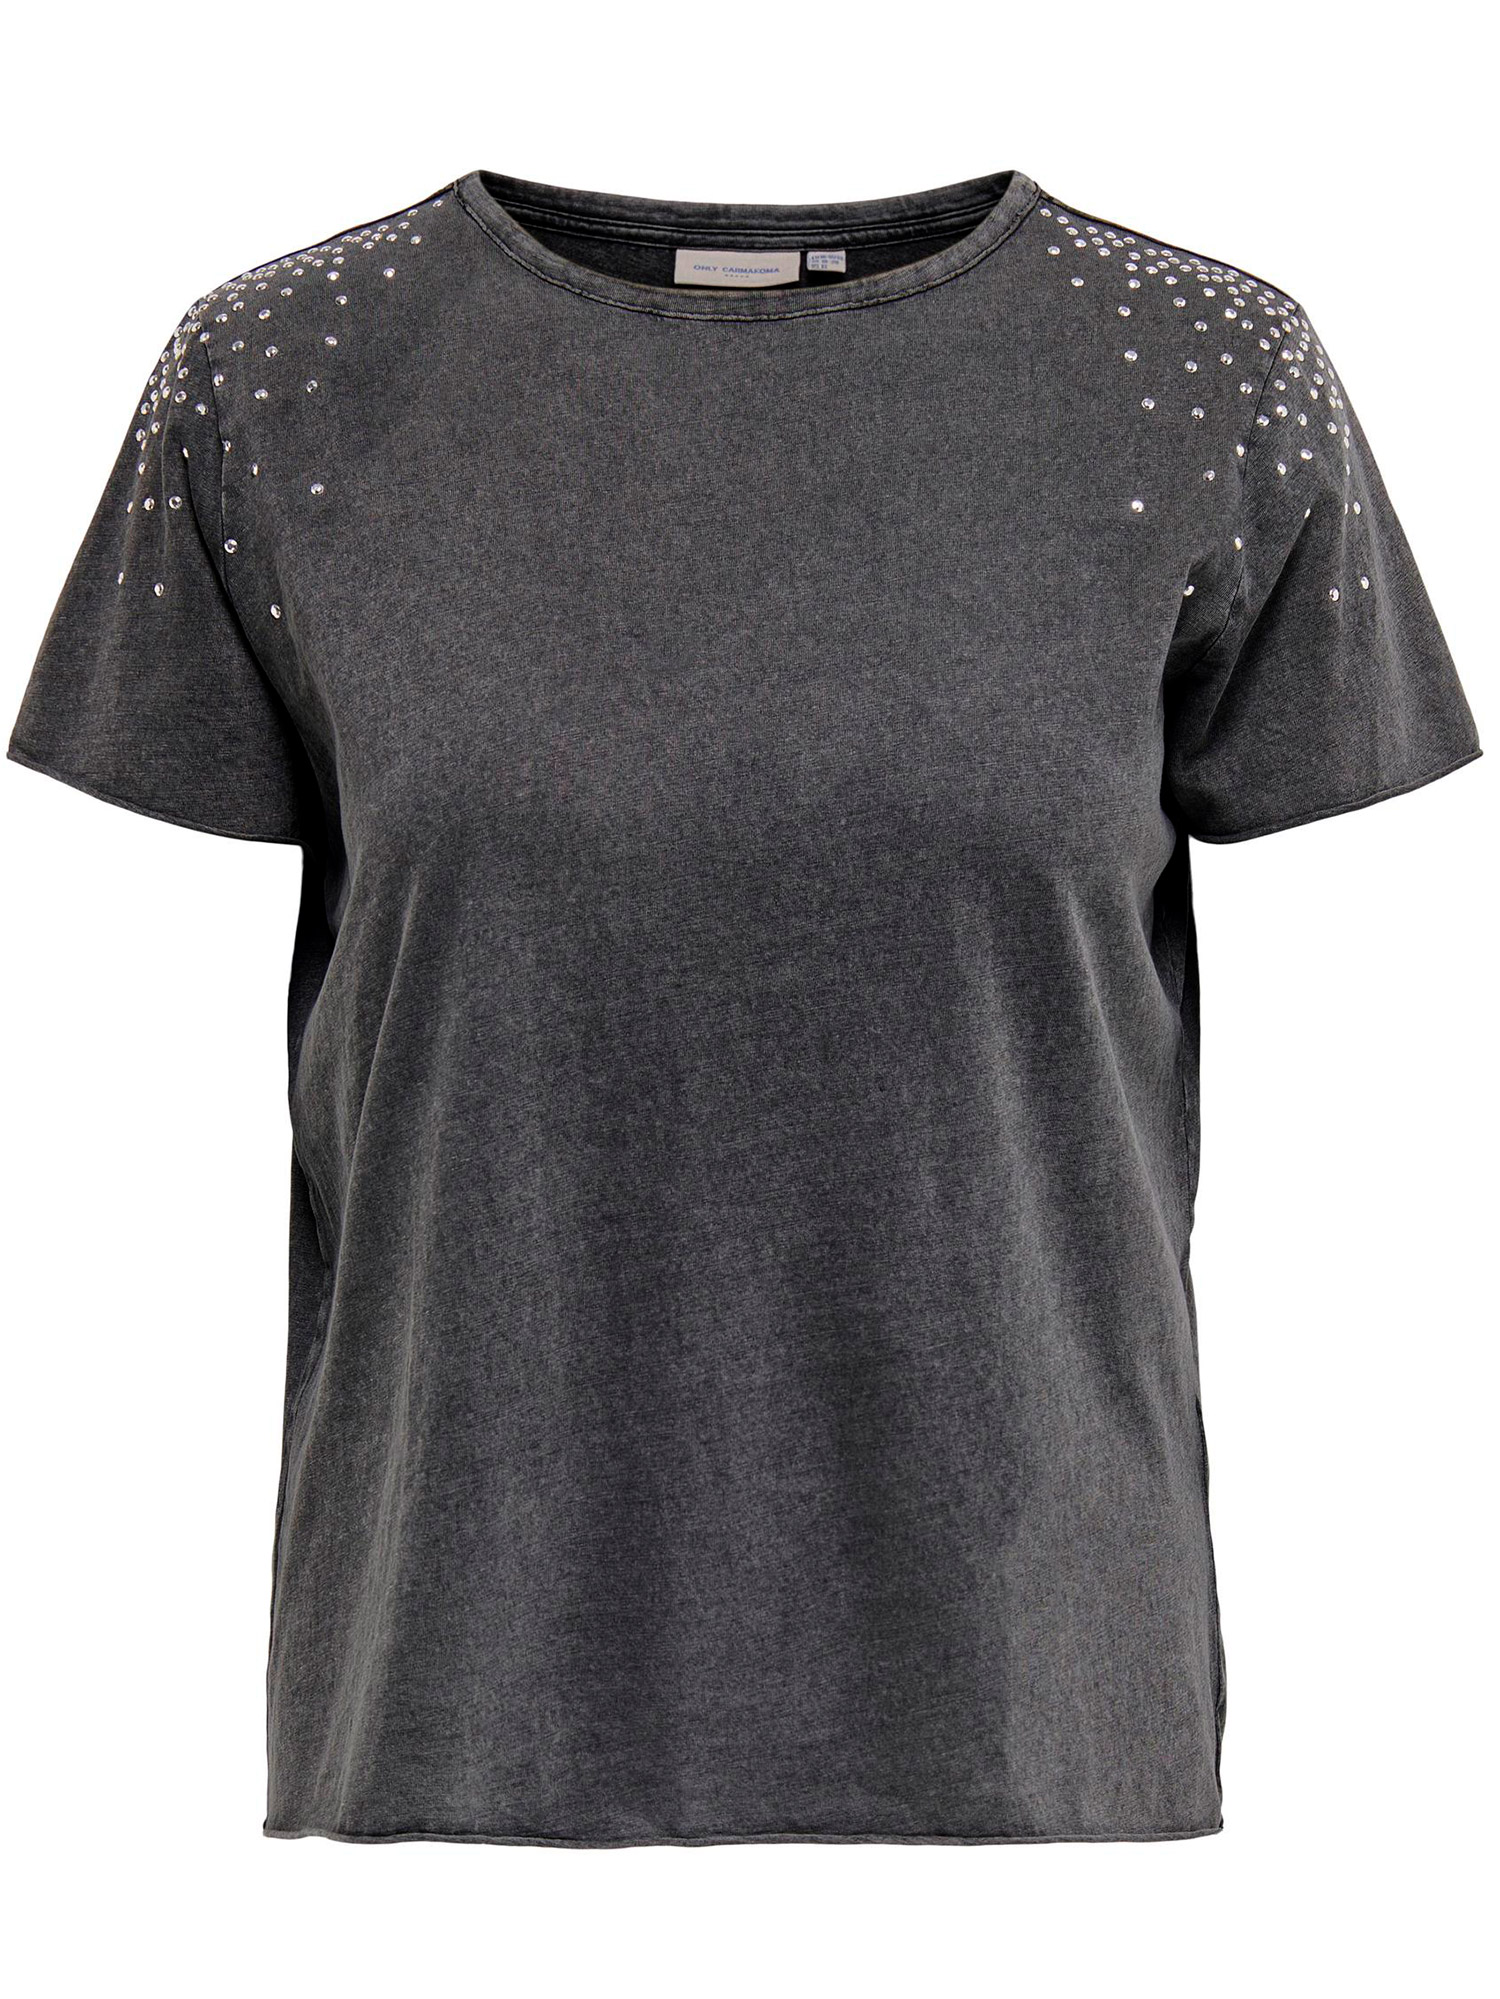 MIKO - Sort bomulds t-shirt med nitter på skulderne fra Only Carmakoma